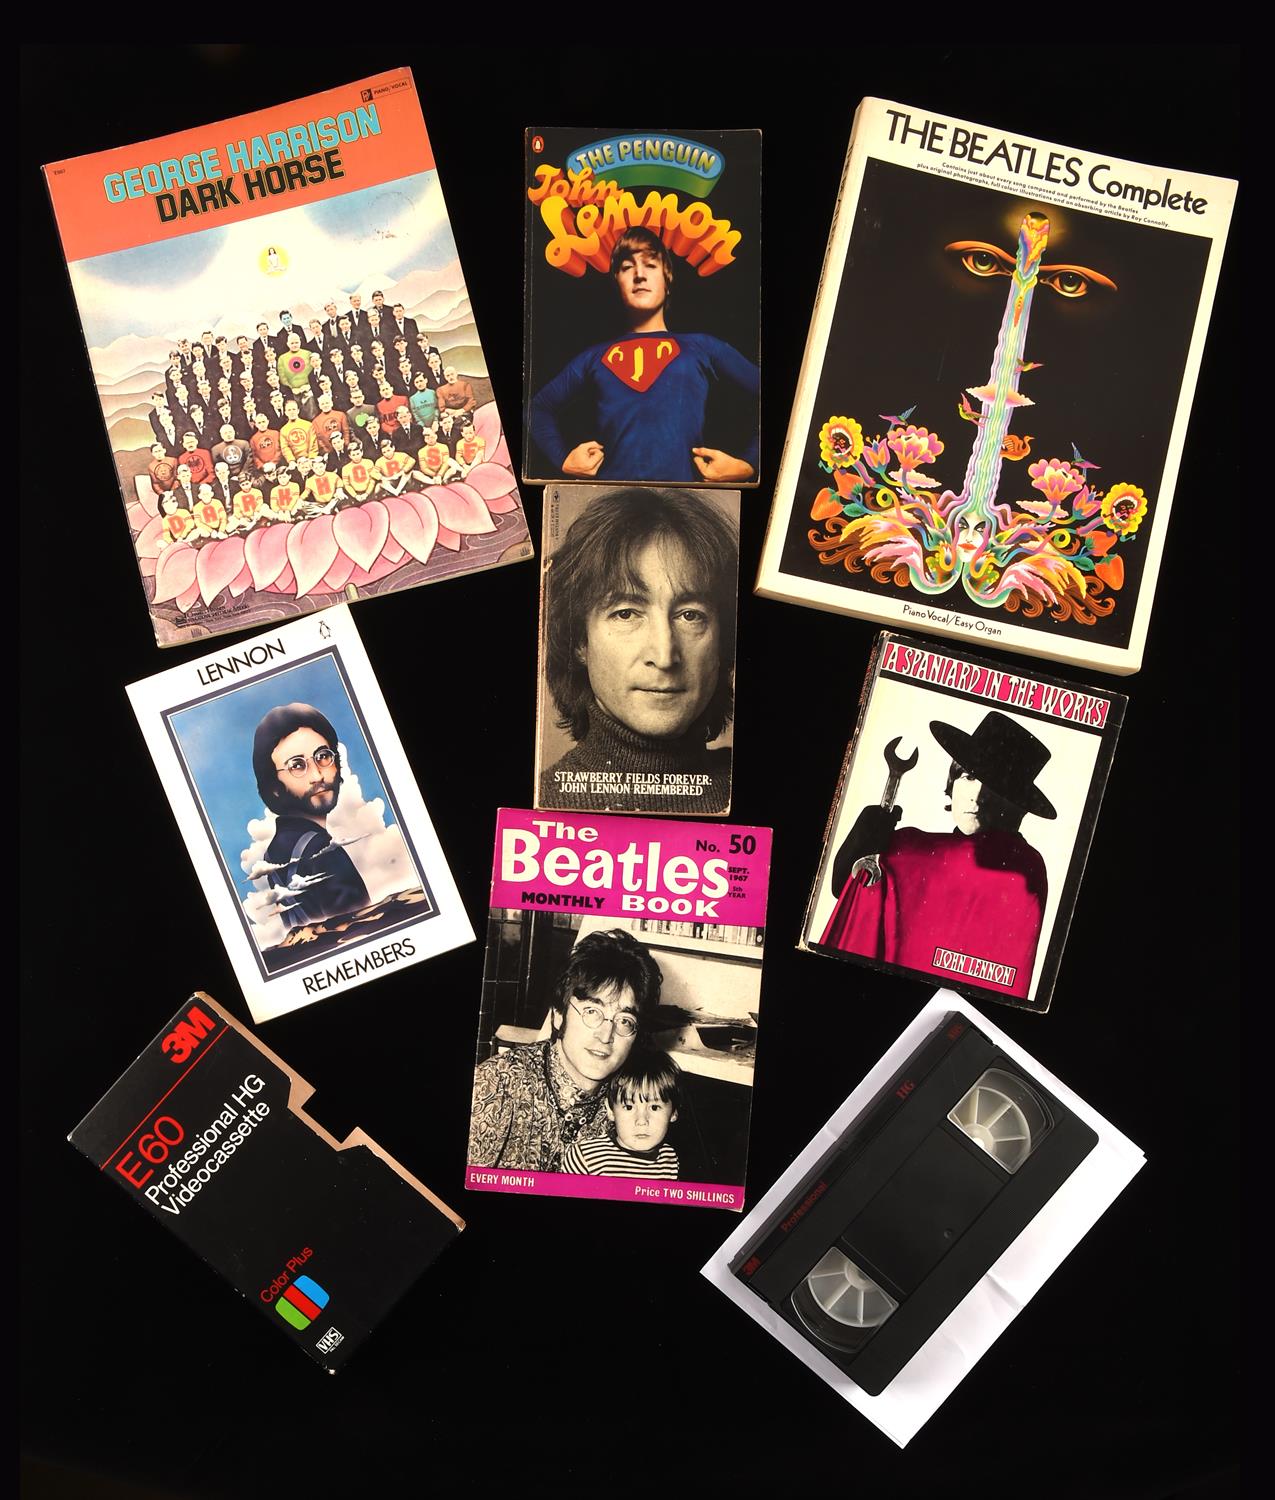 The Beatles – VHS cassette tape transferred from 16mm cinefilm and related books – VHS cassette